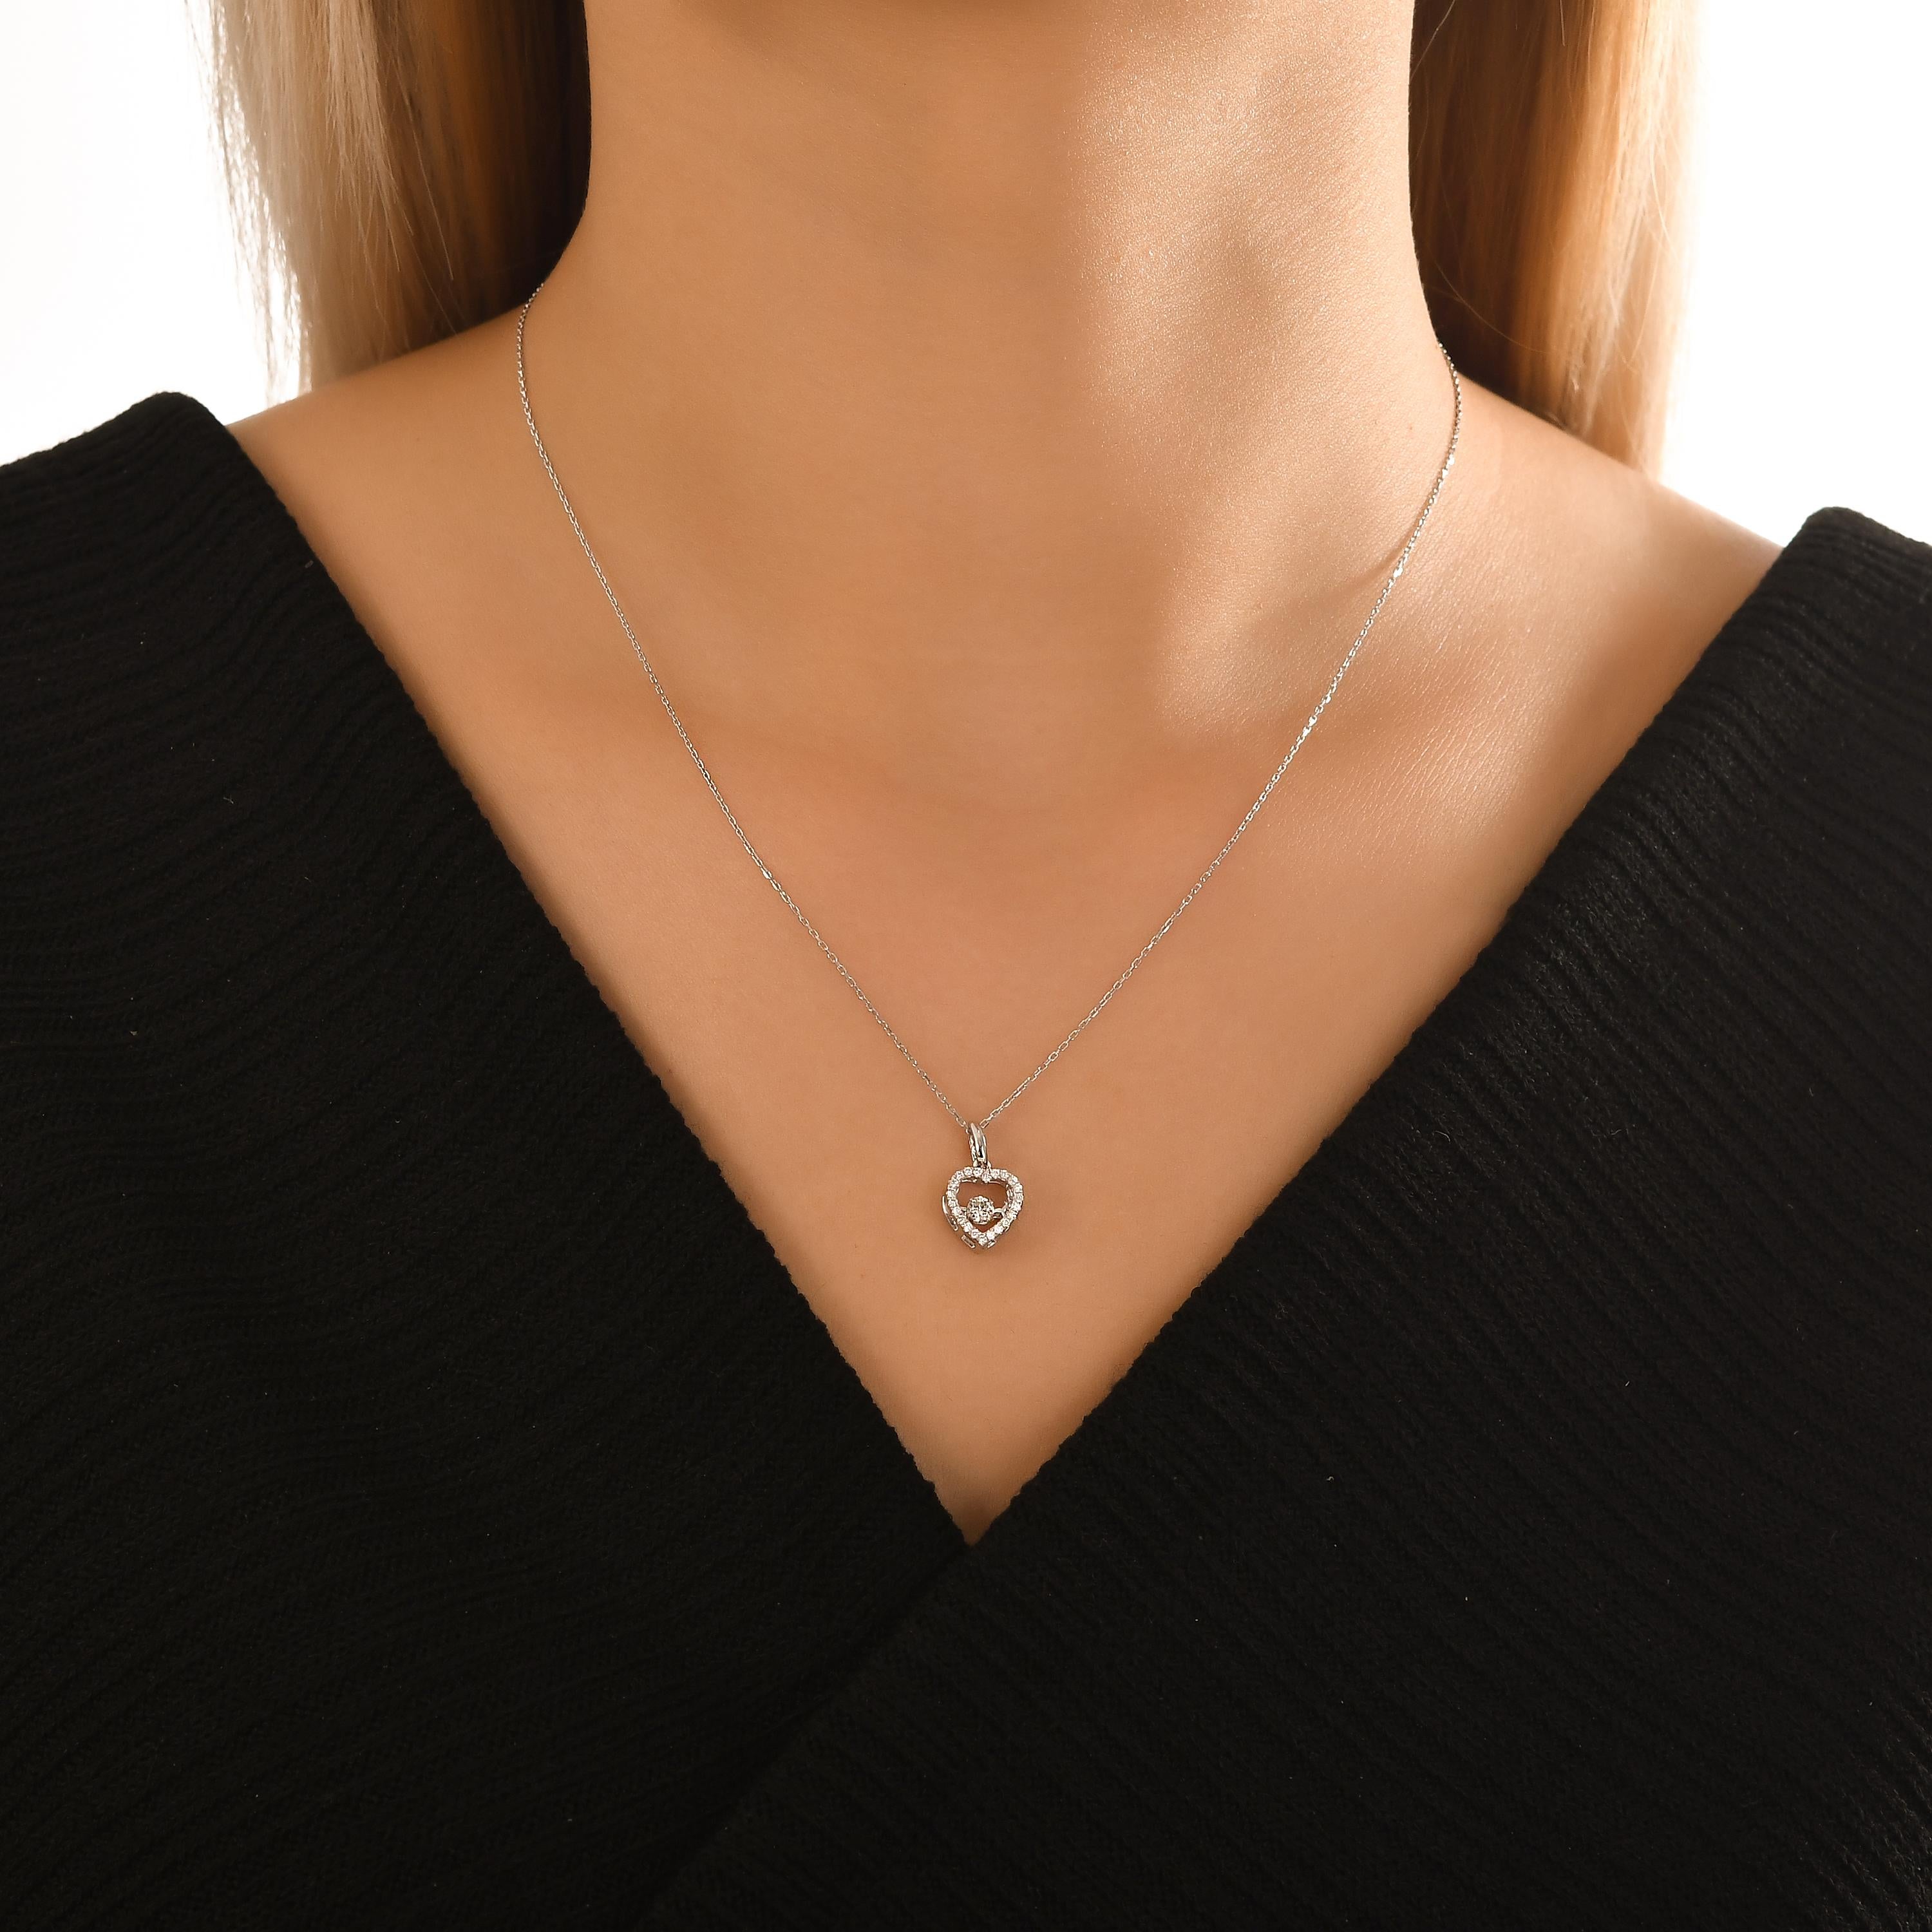 Round Cut Love Diamond Pendant 18K White Gold Necklace, .20ct. White Diamonds For Sale